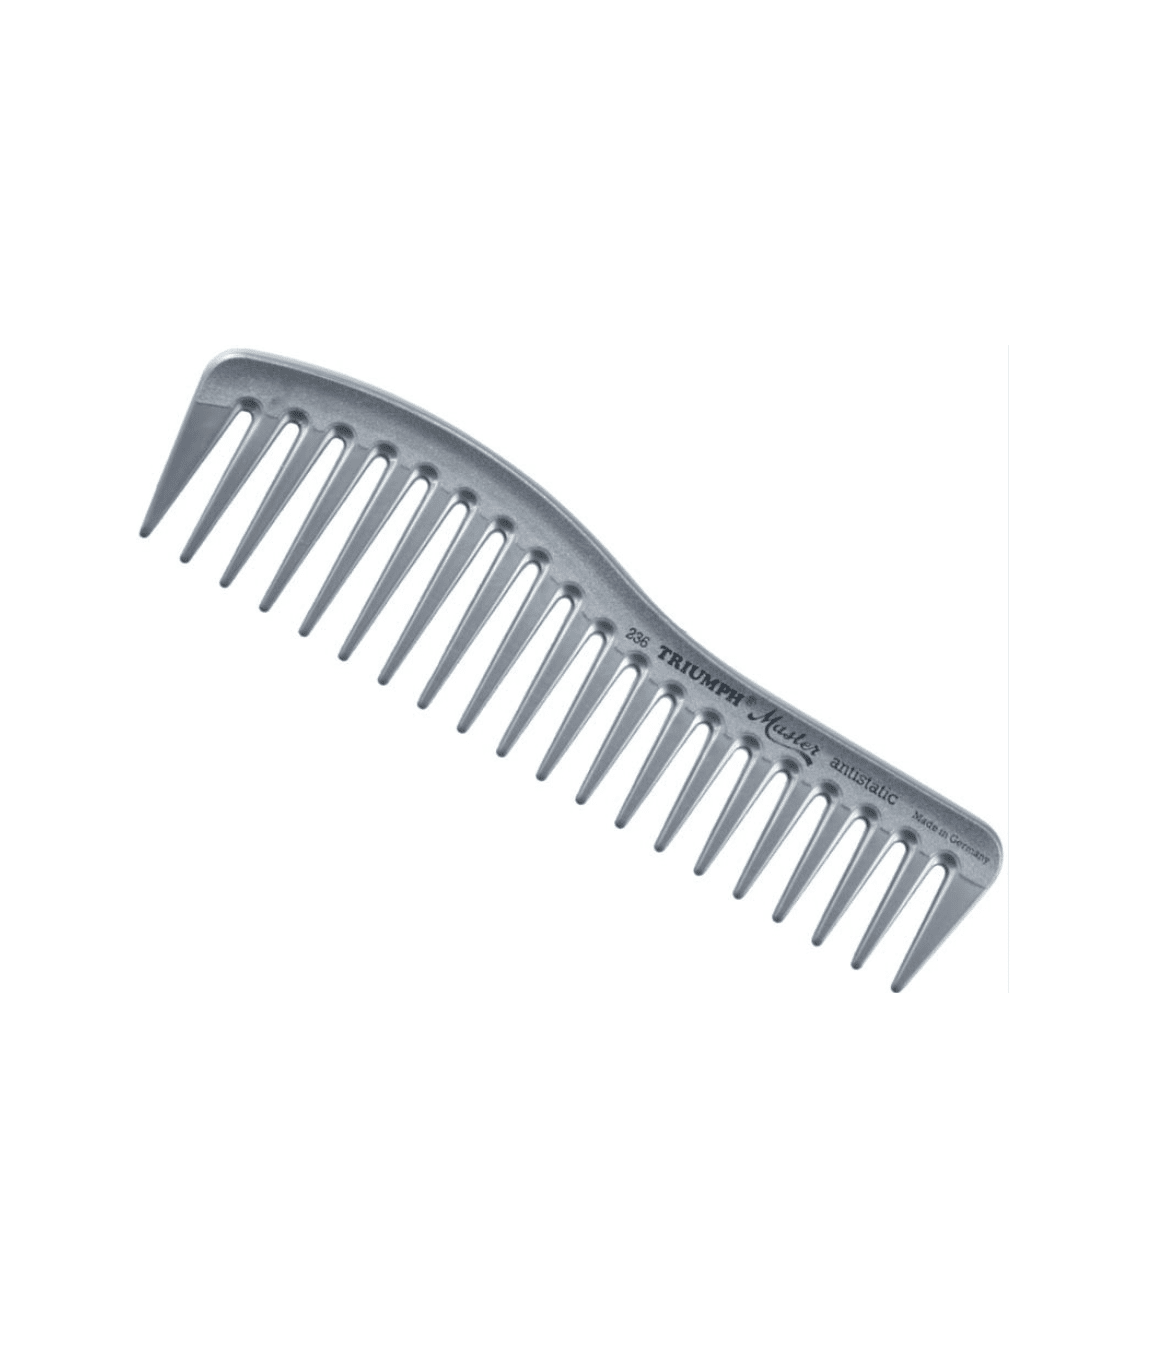 Ship-Shape Comb & Brush Cleaner - Barber Supplies, Barber Depots